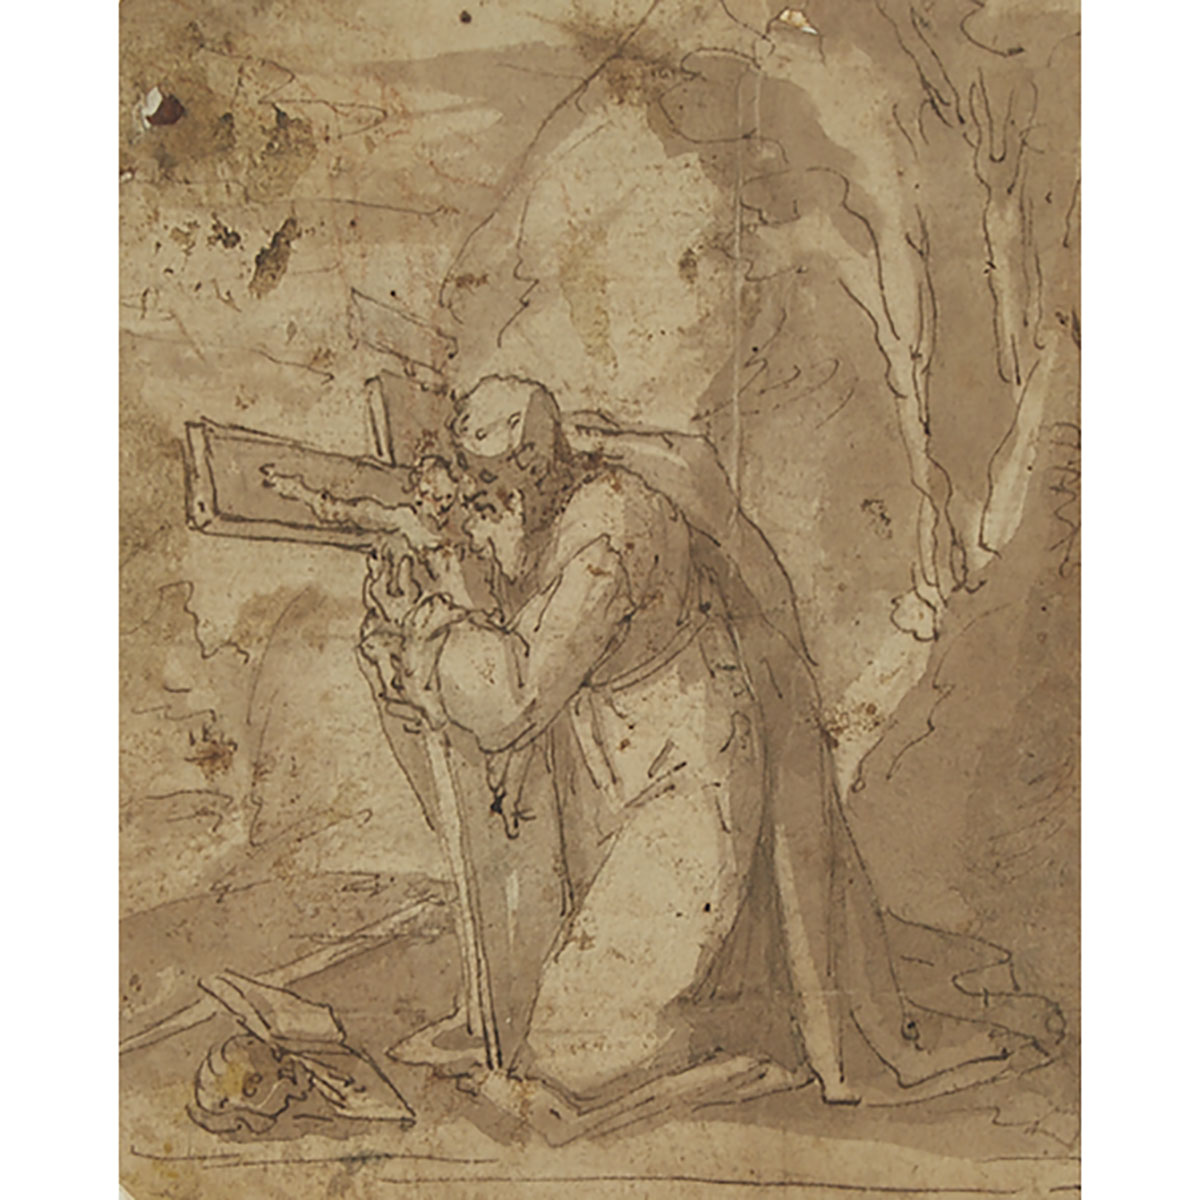 Manner of Giovanni Battista Tiepolo (1696-1770)